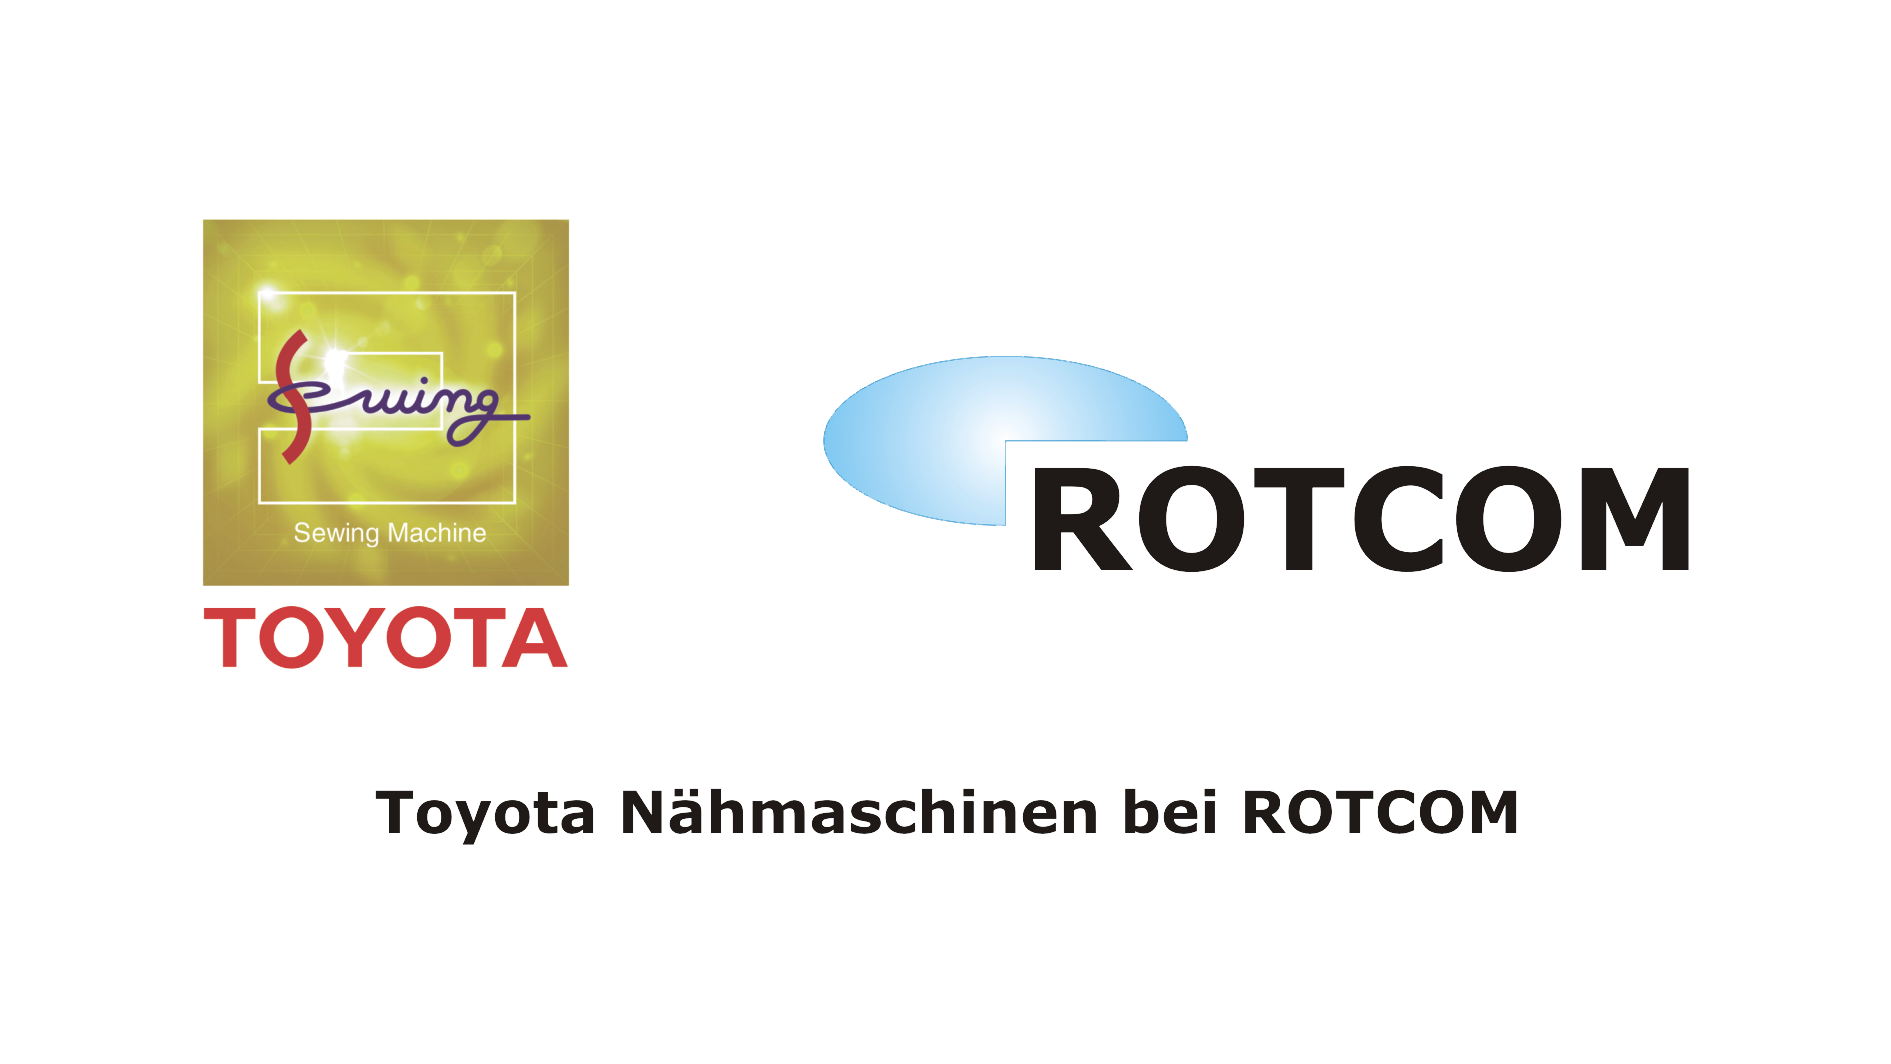 Toyota-Rotcom